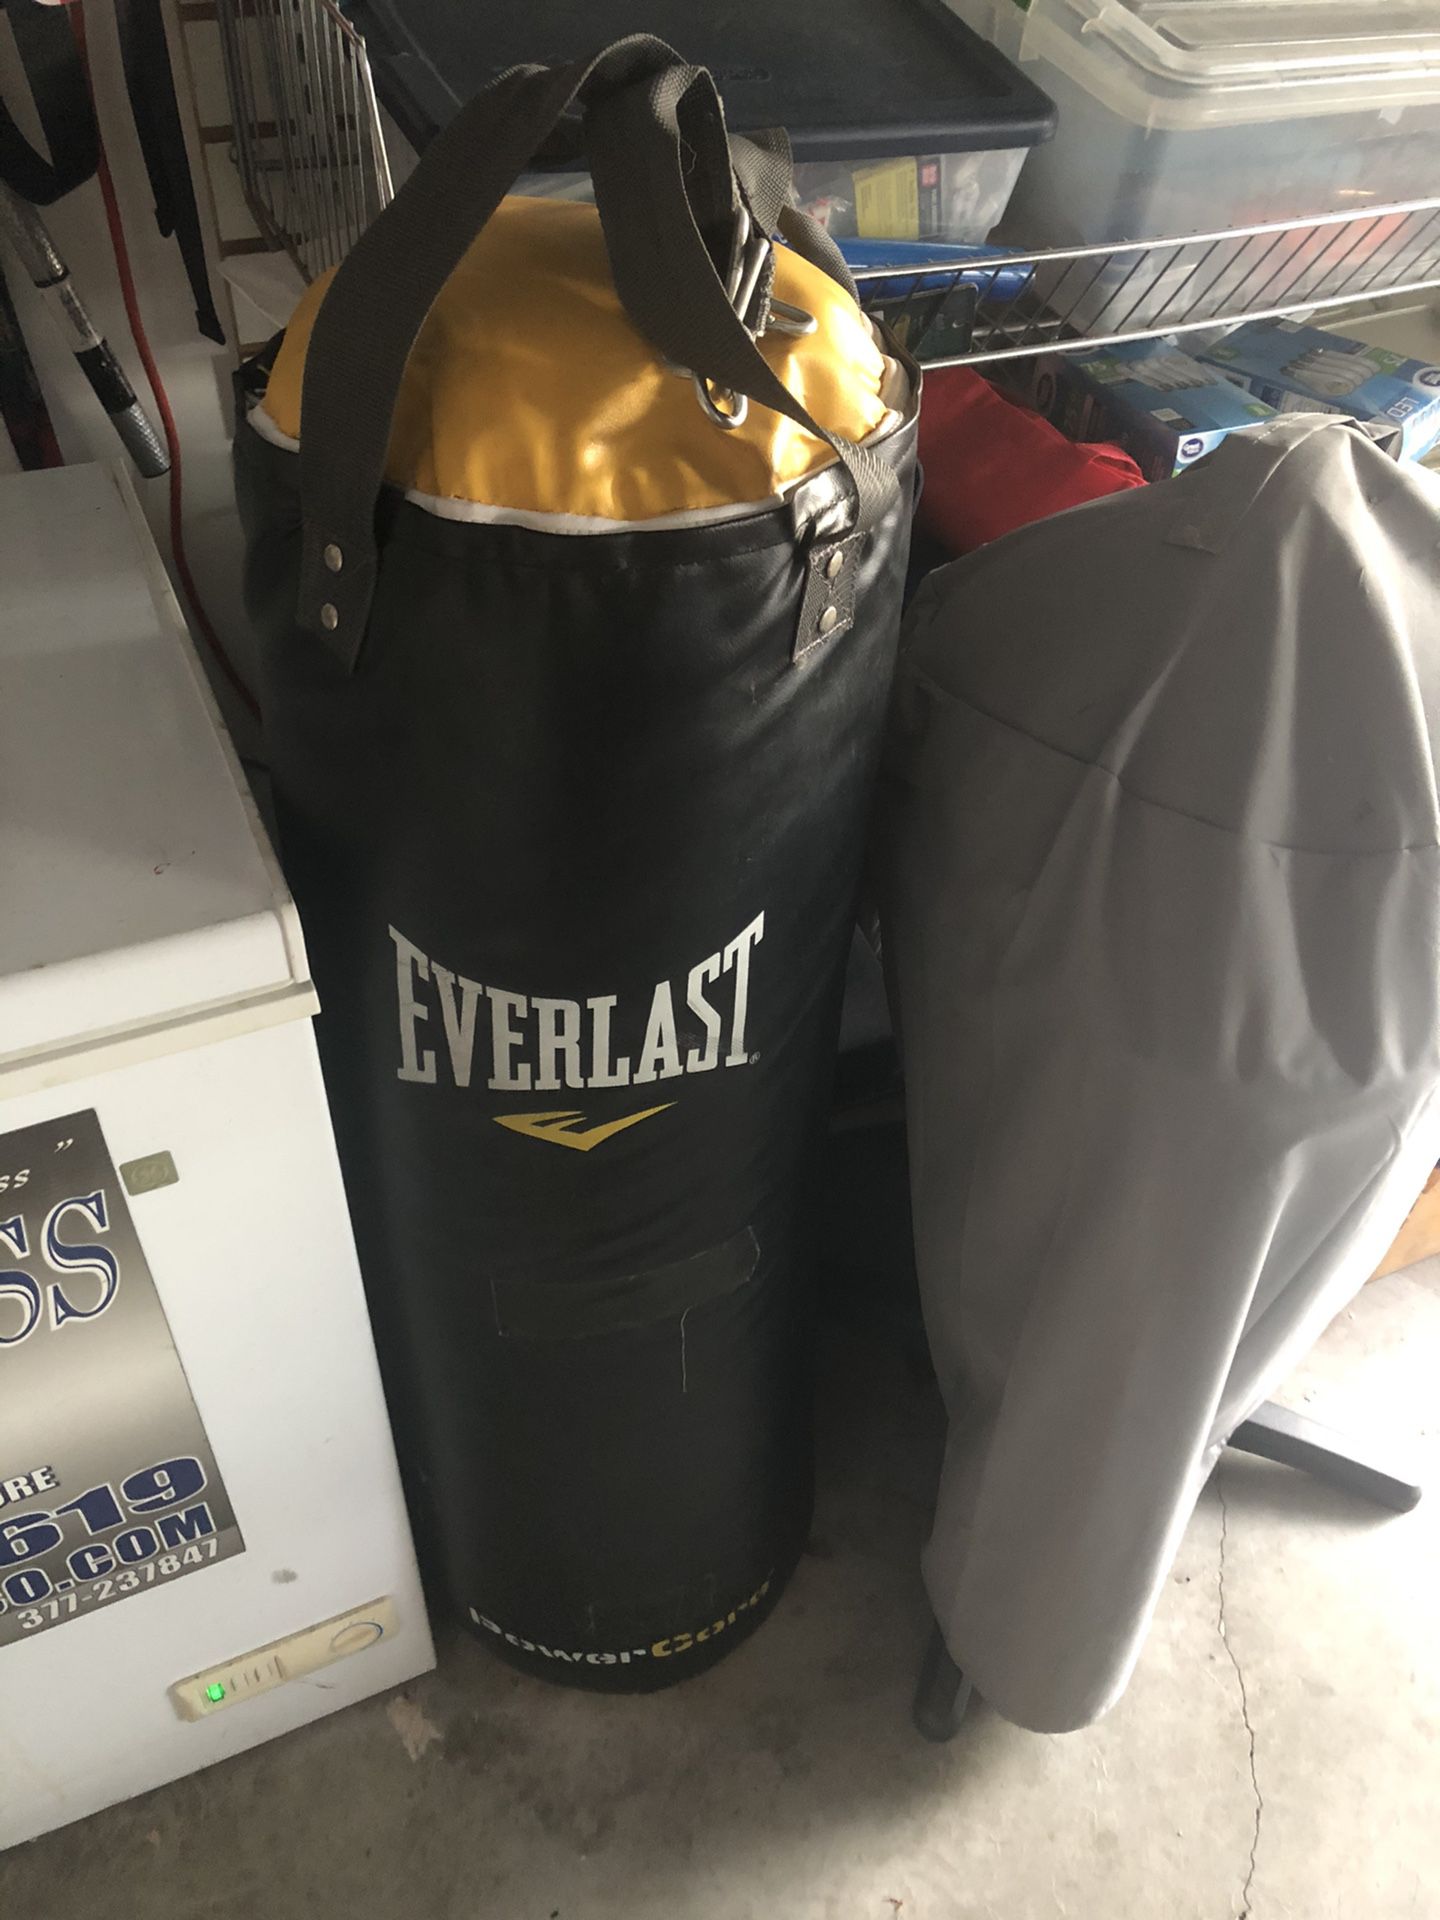 Everlast heavy punching bag